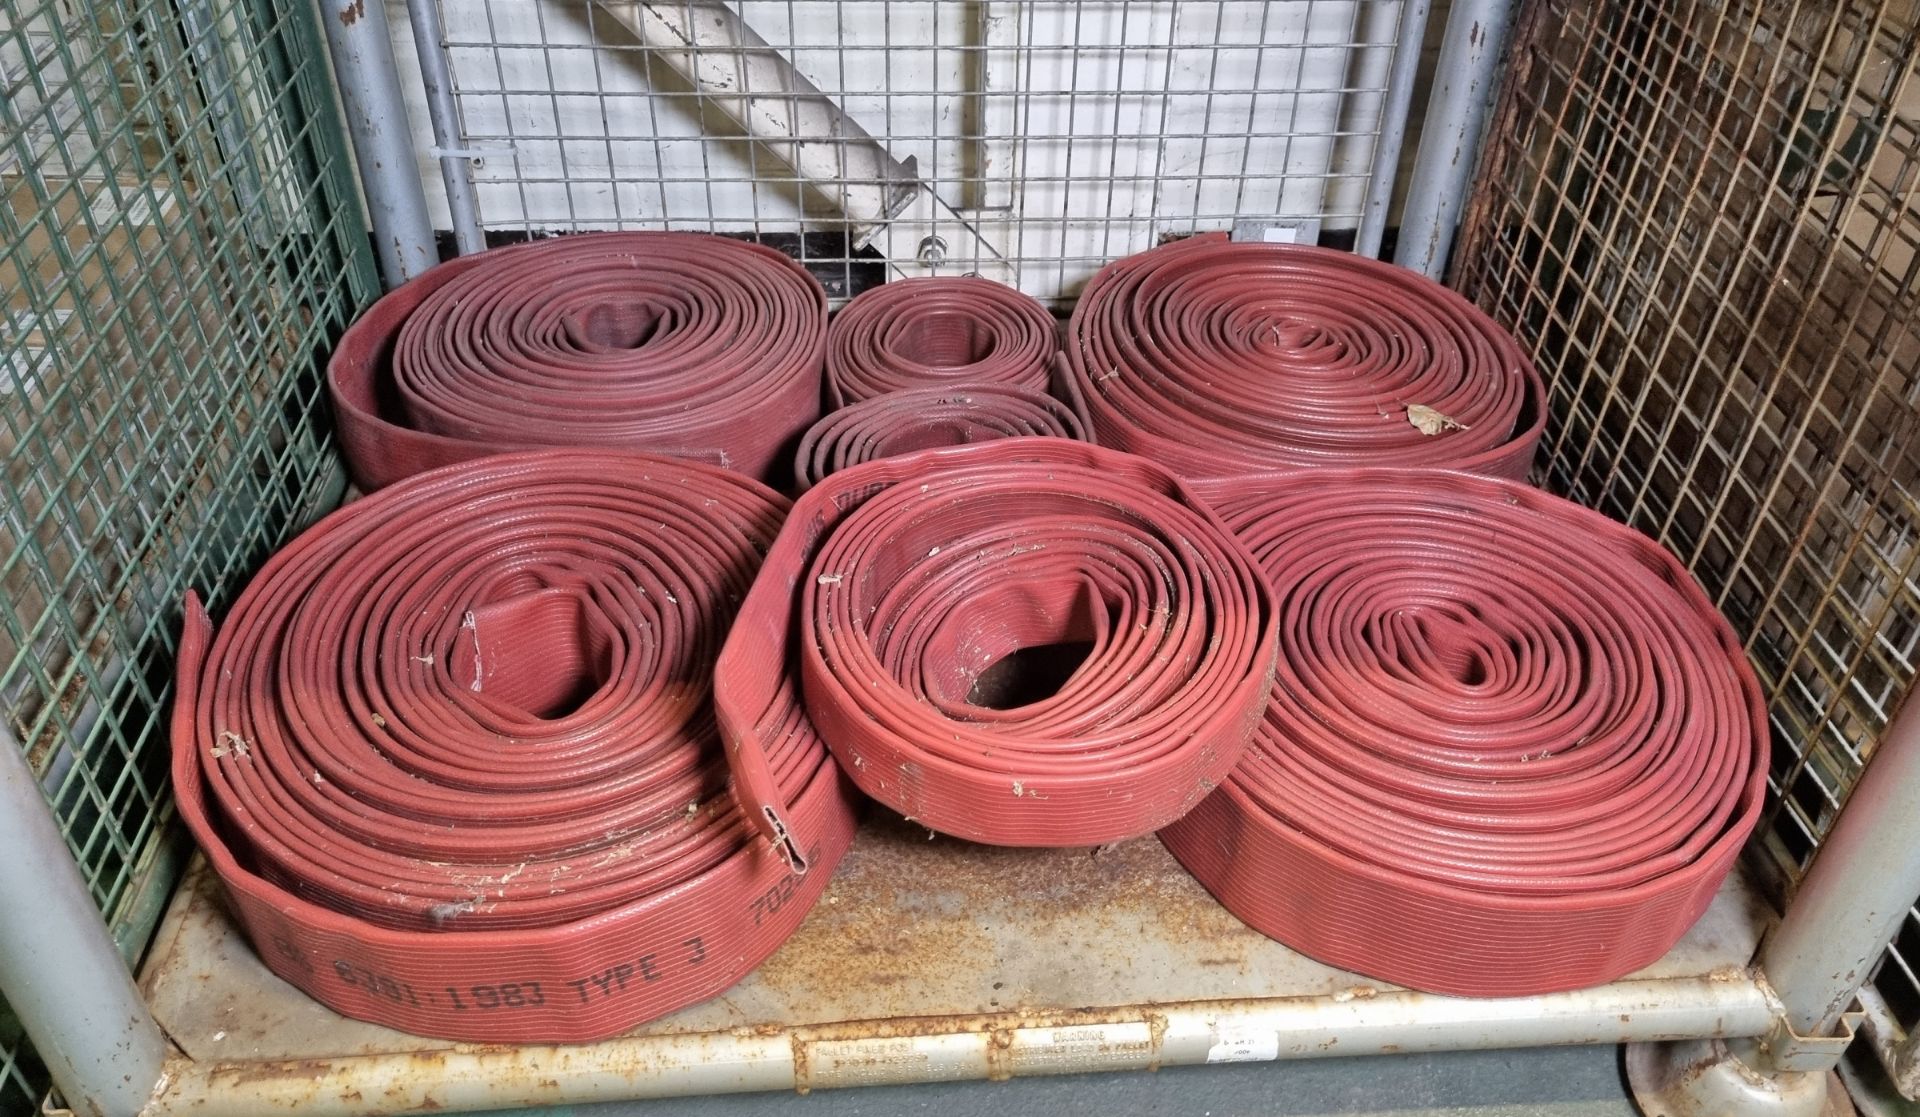 7x Layflat fire hose - mixed sizes no couplings